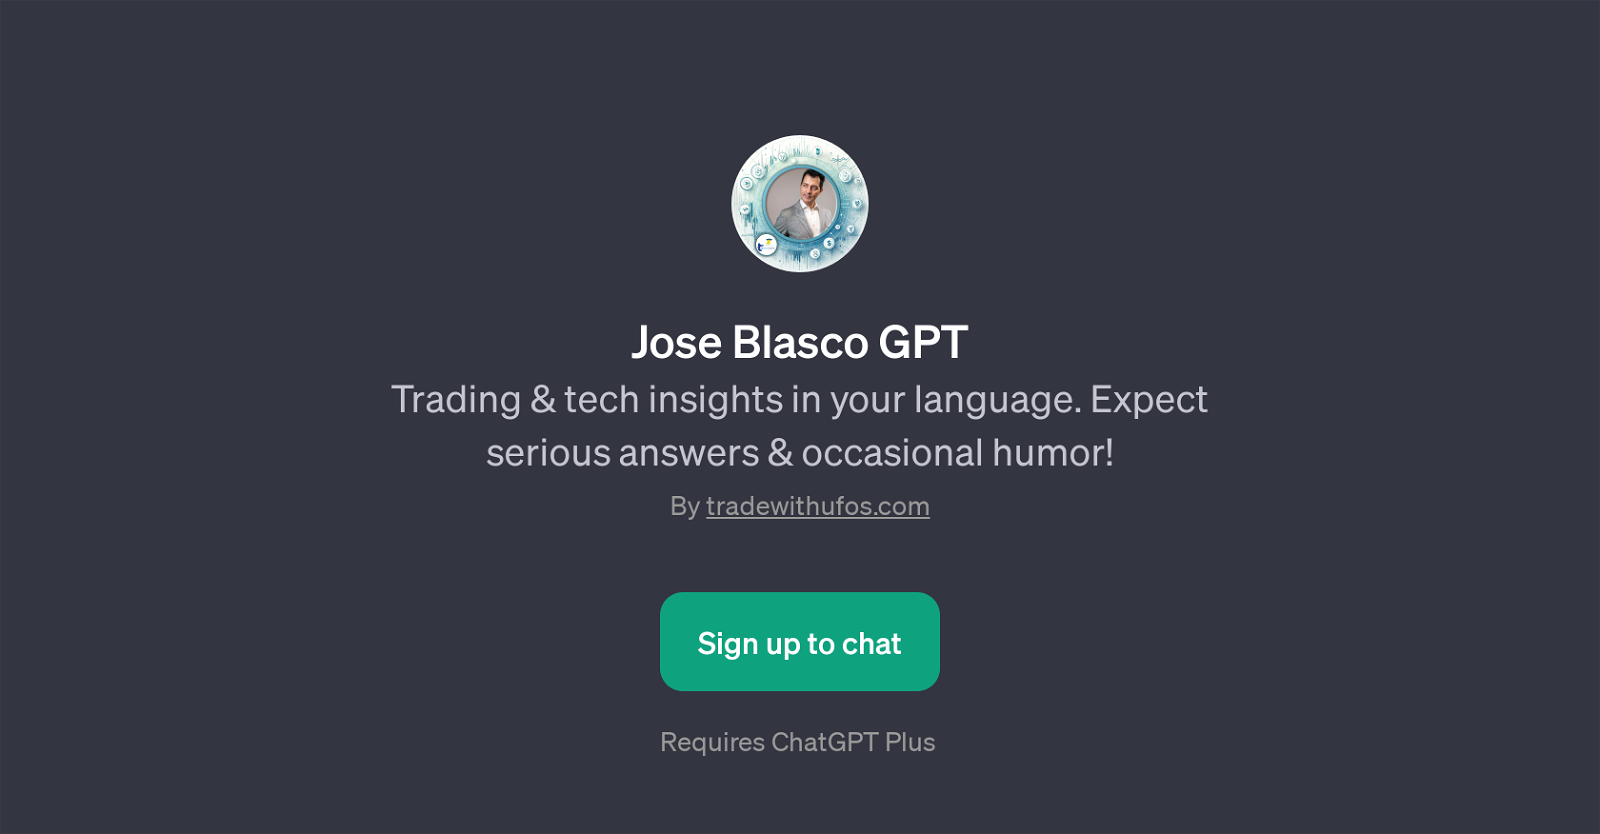 Jose Blasco GPT website